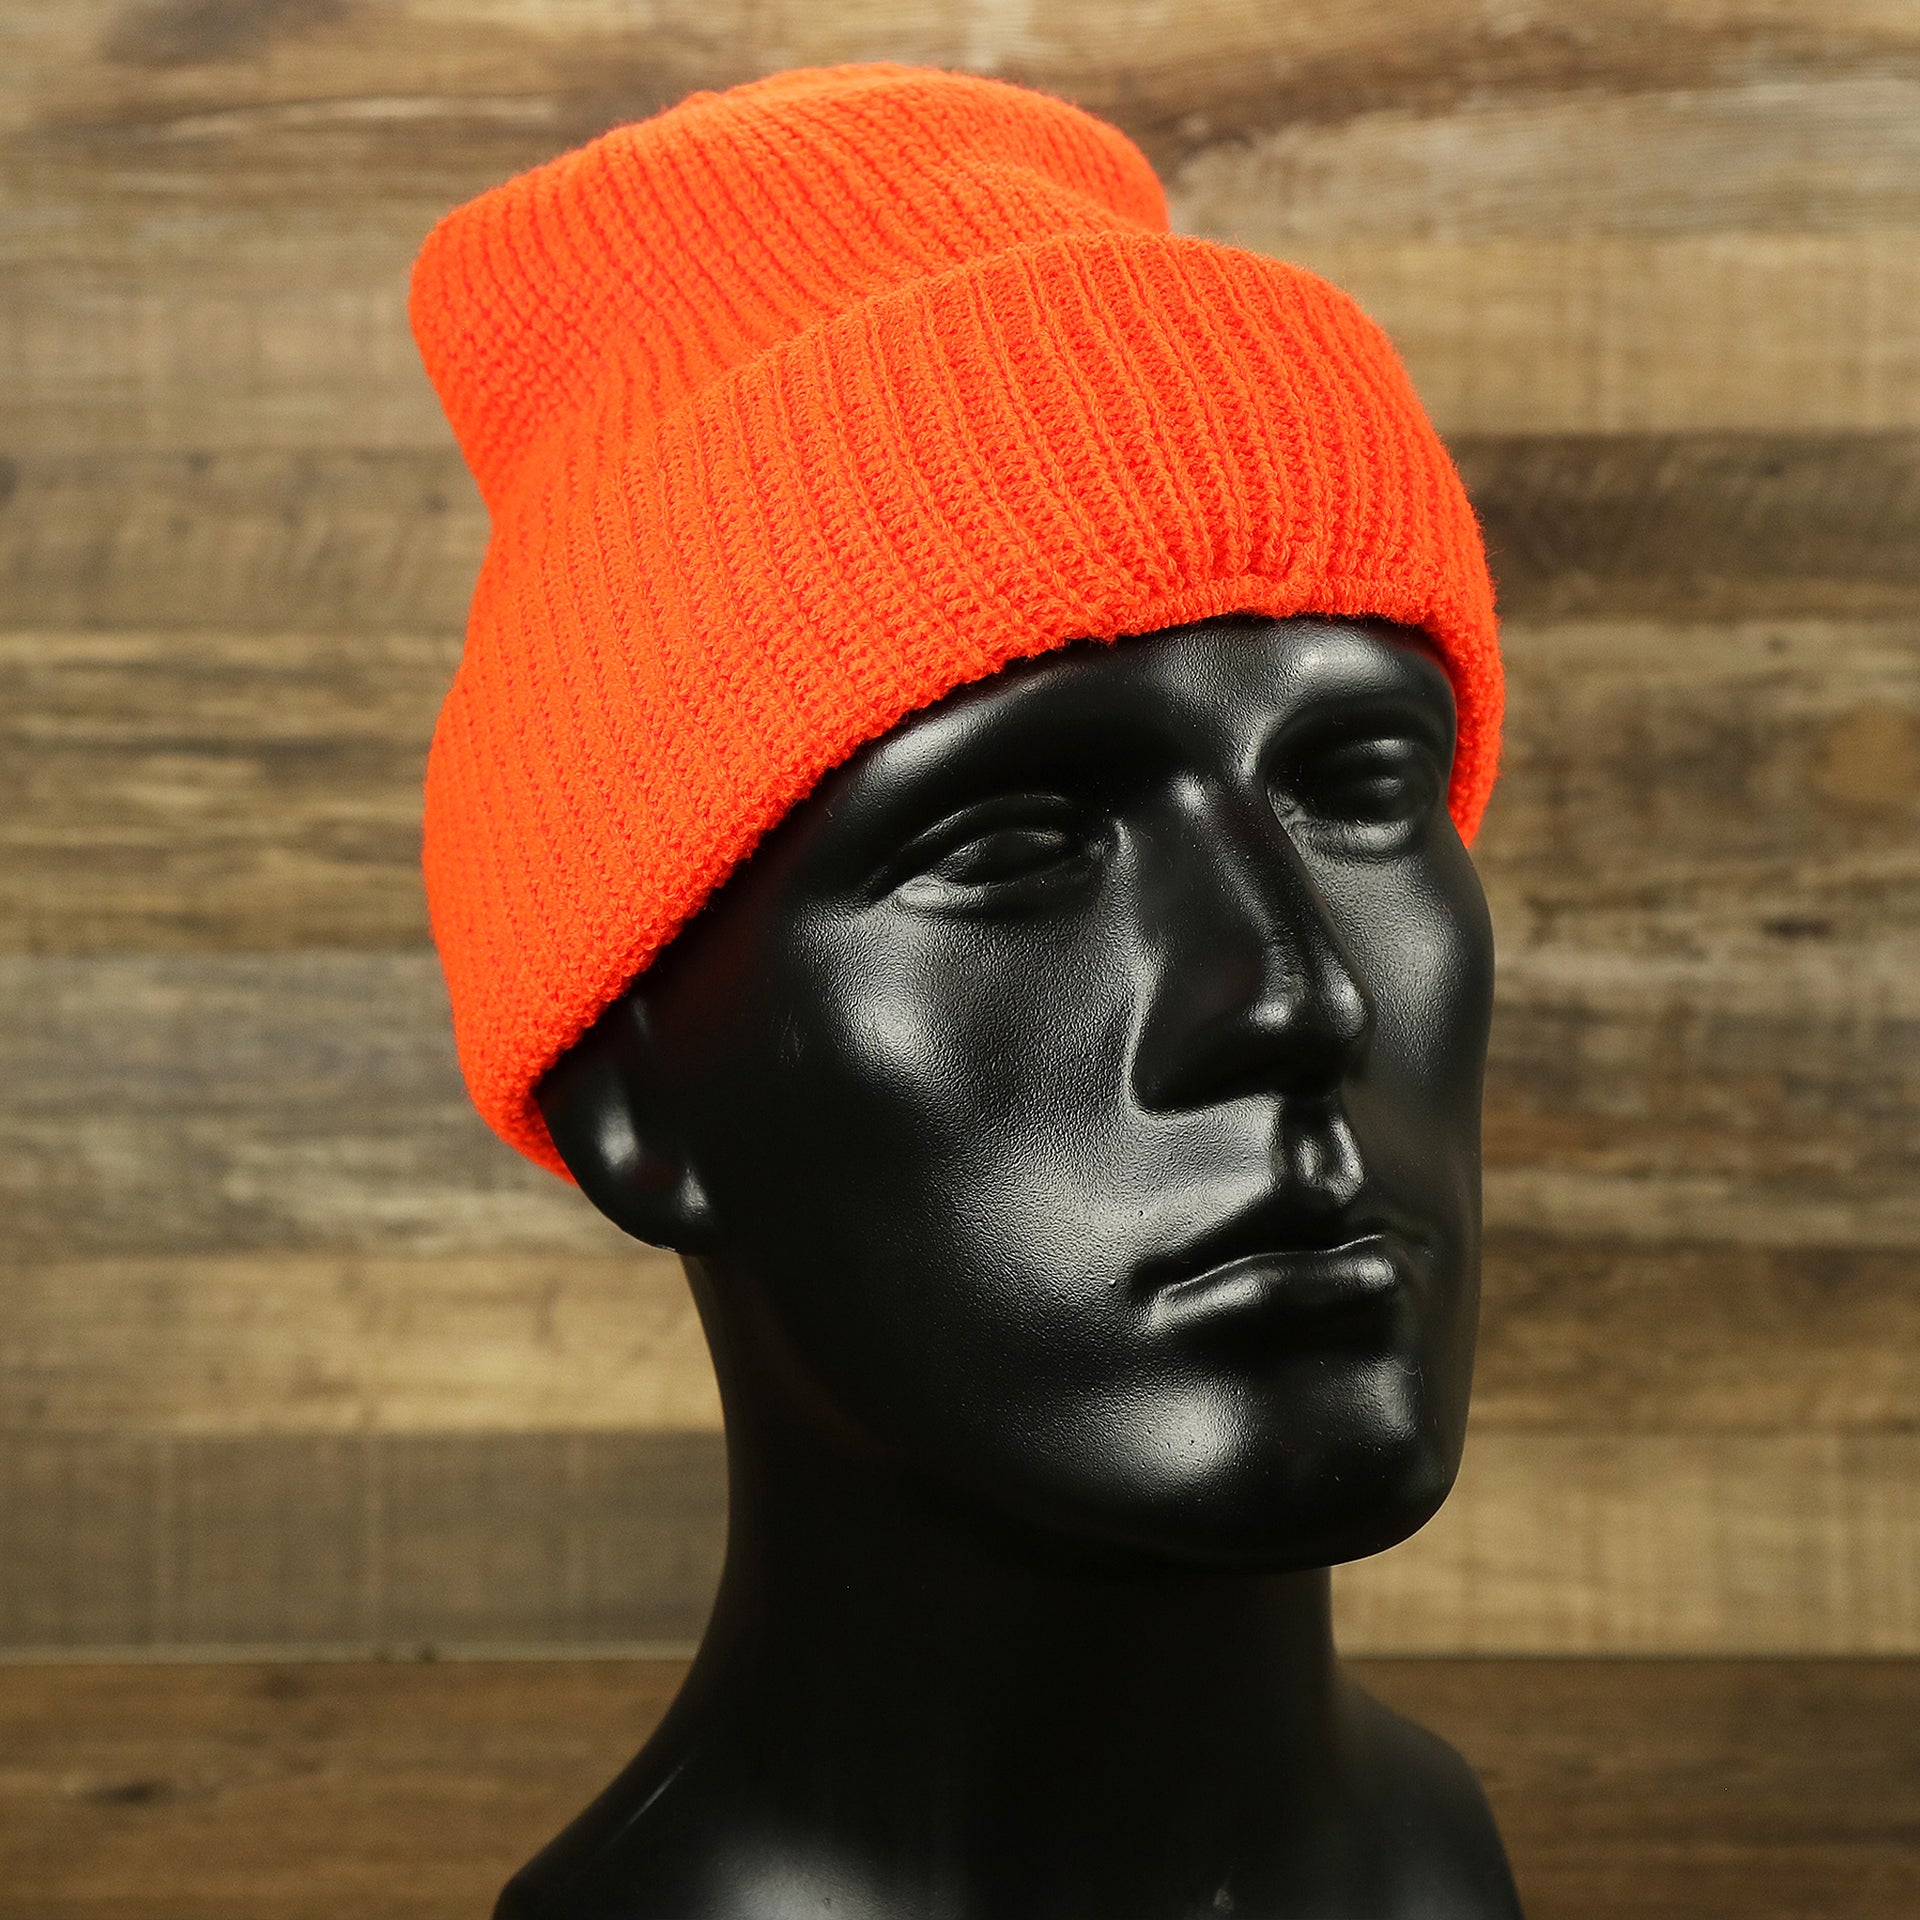 The Safety Orange Snug Fit Three Hole Balaclava | Neon Orange Knit Ski Mask